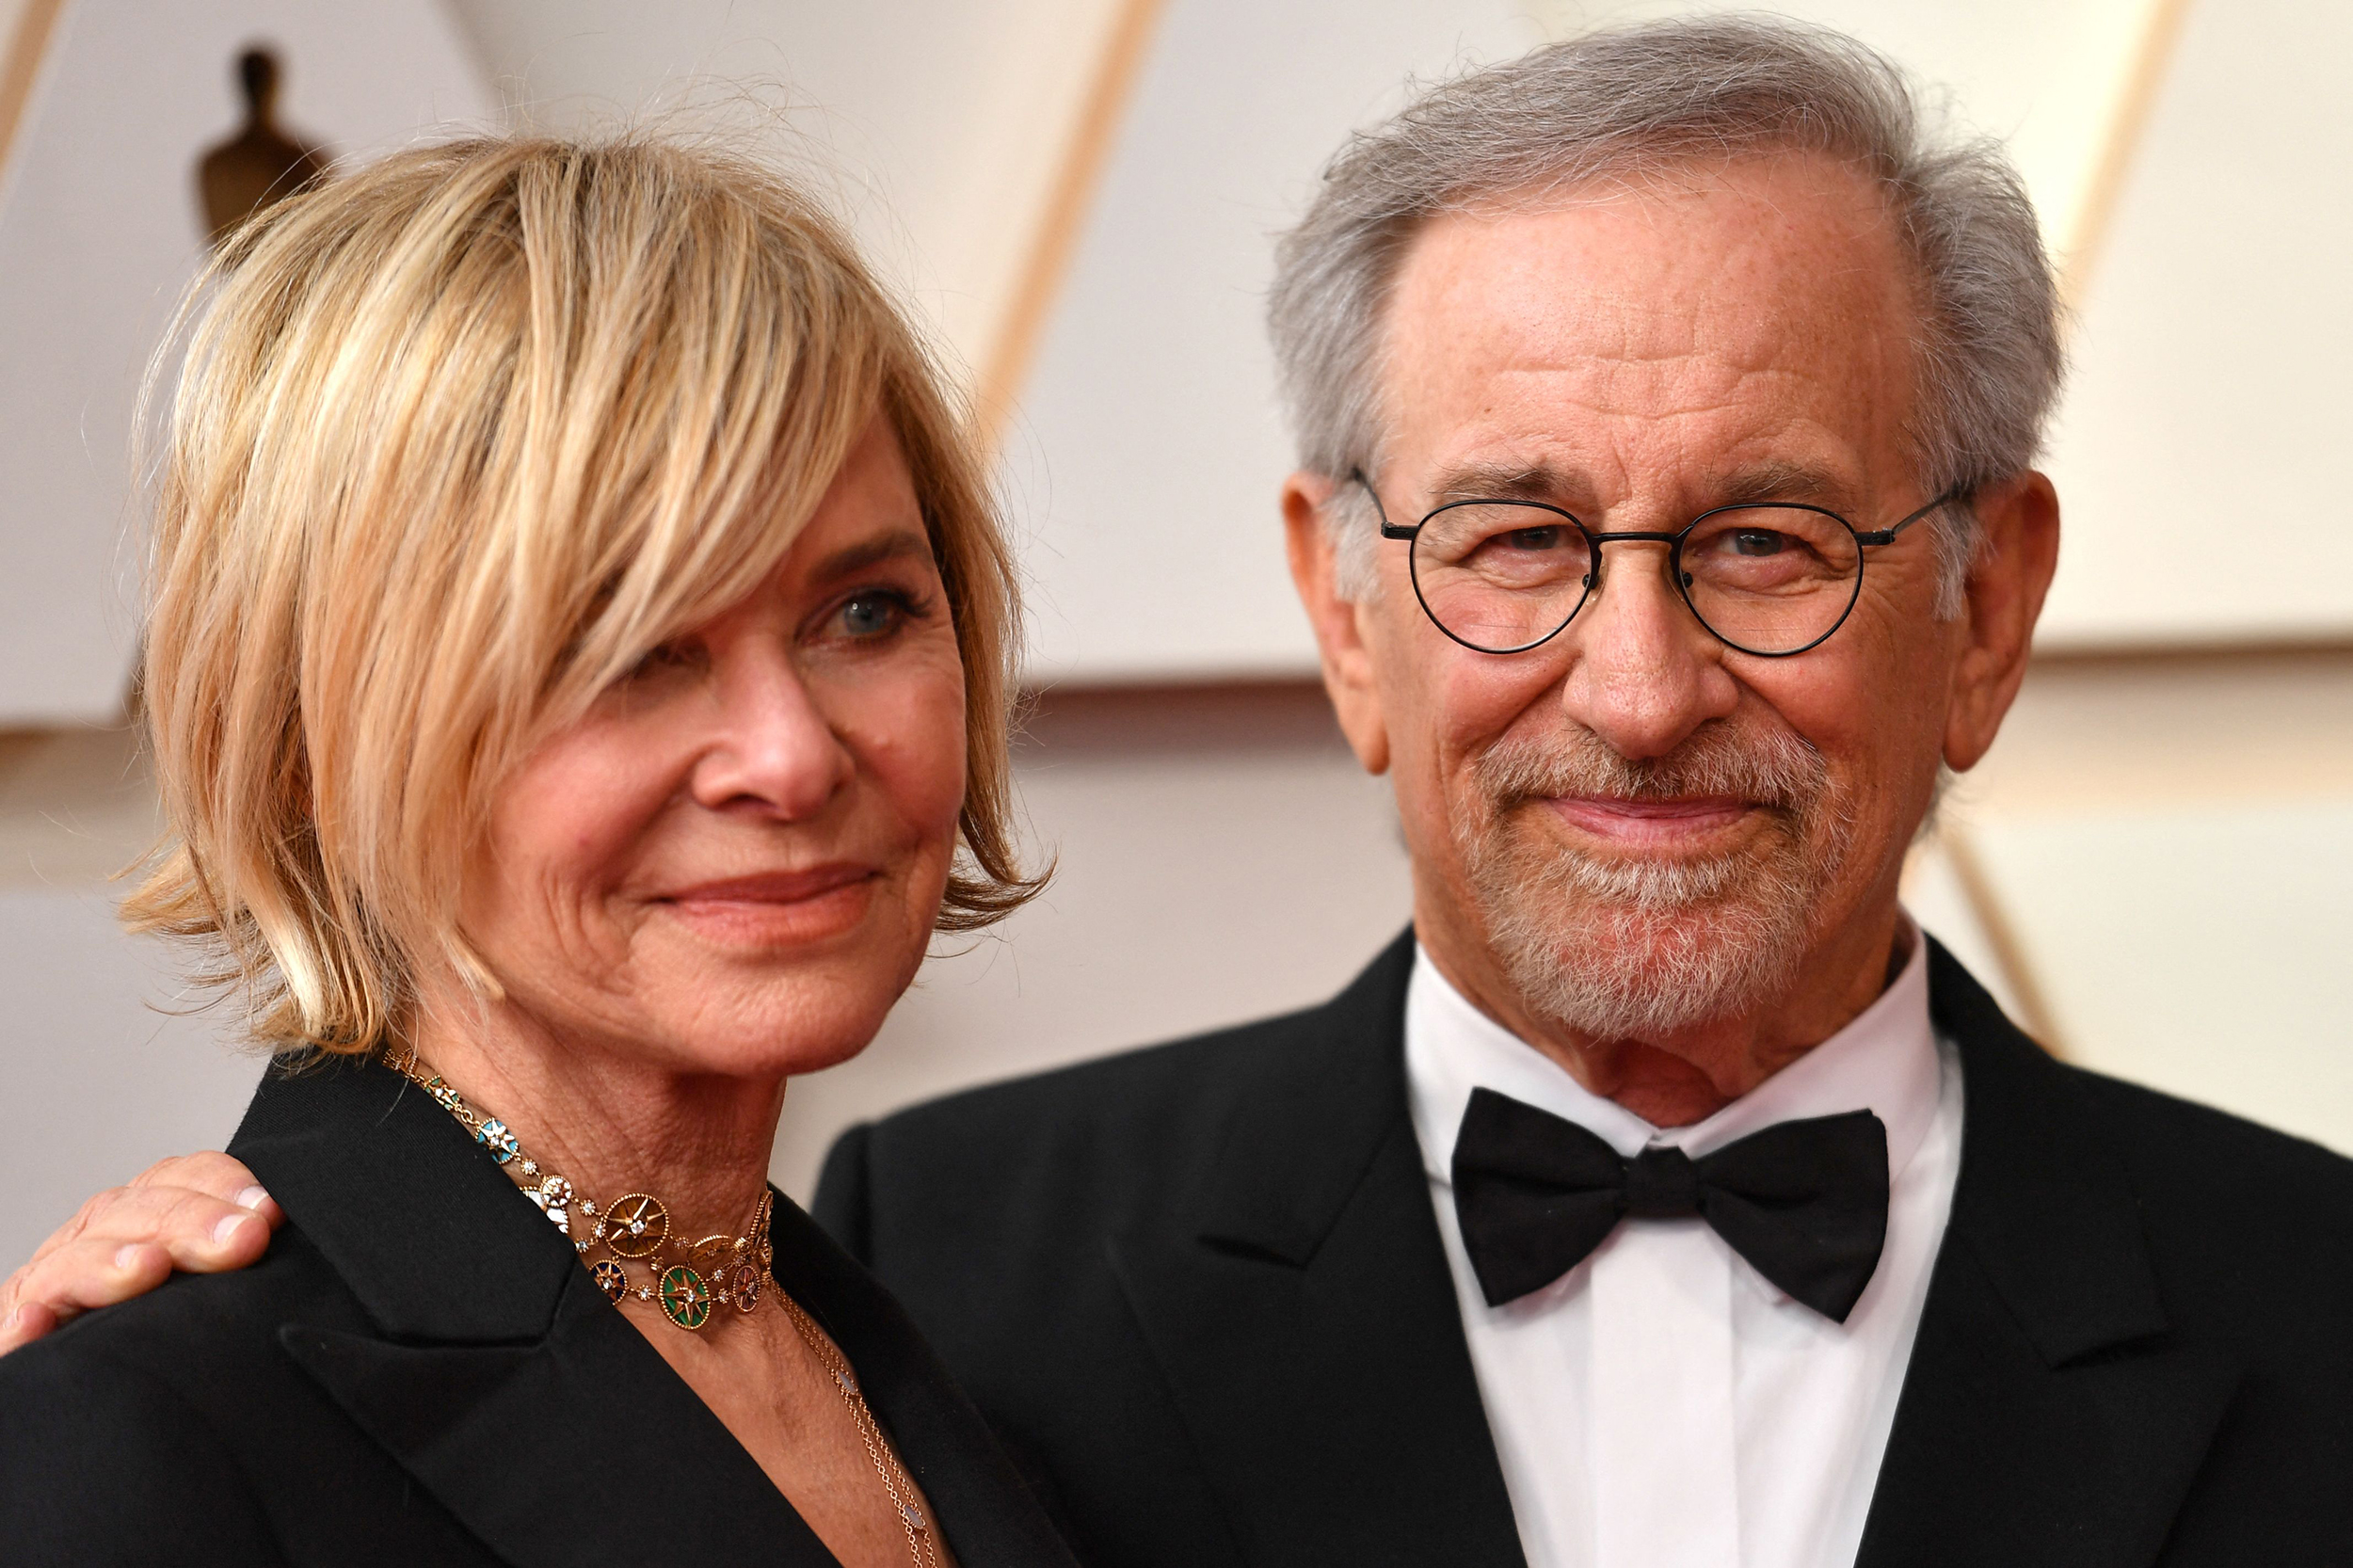 Is Steven Spielberg Gay?